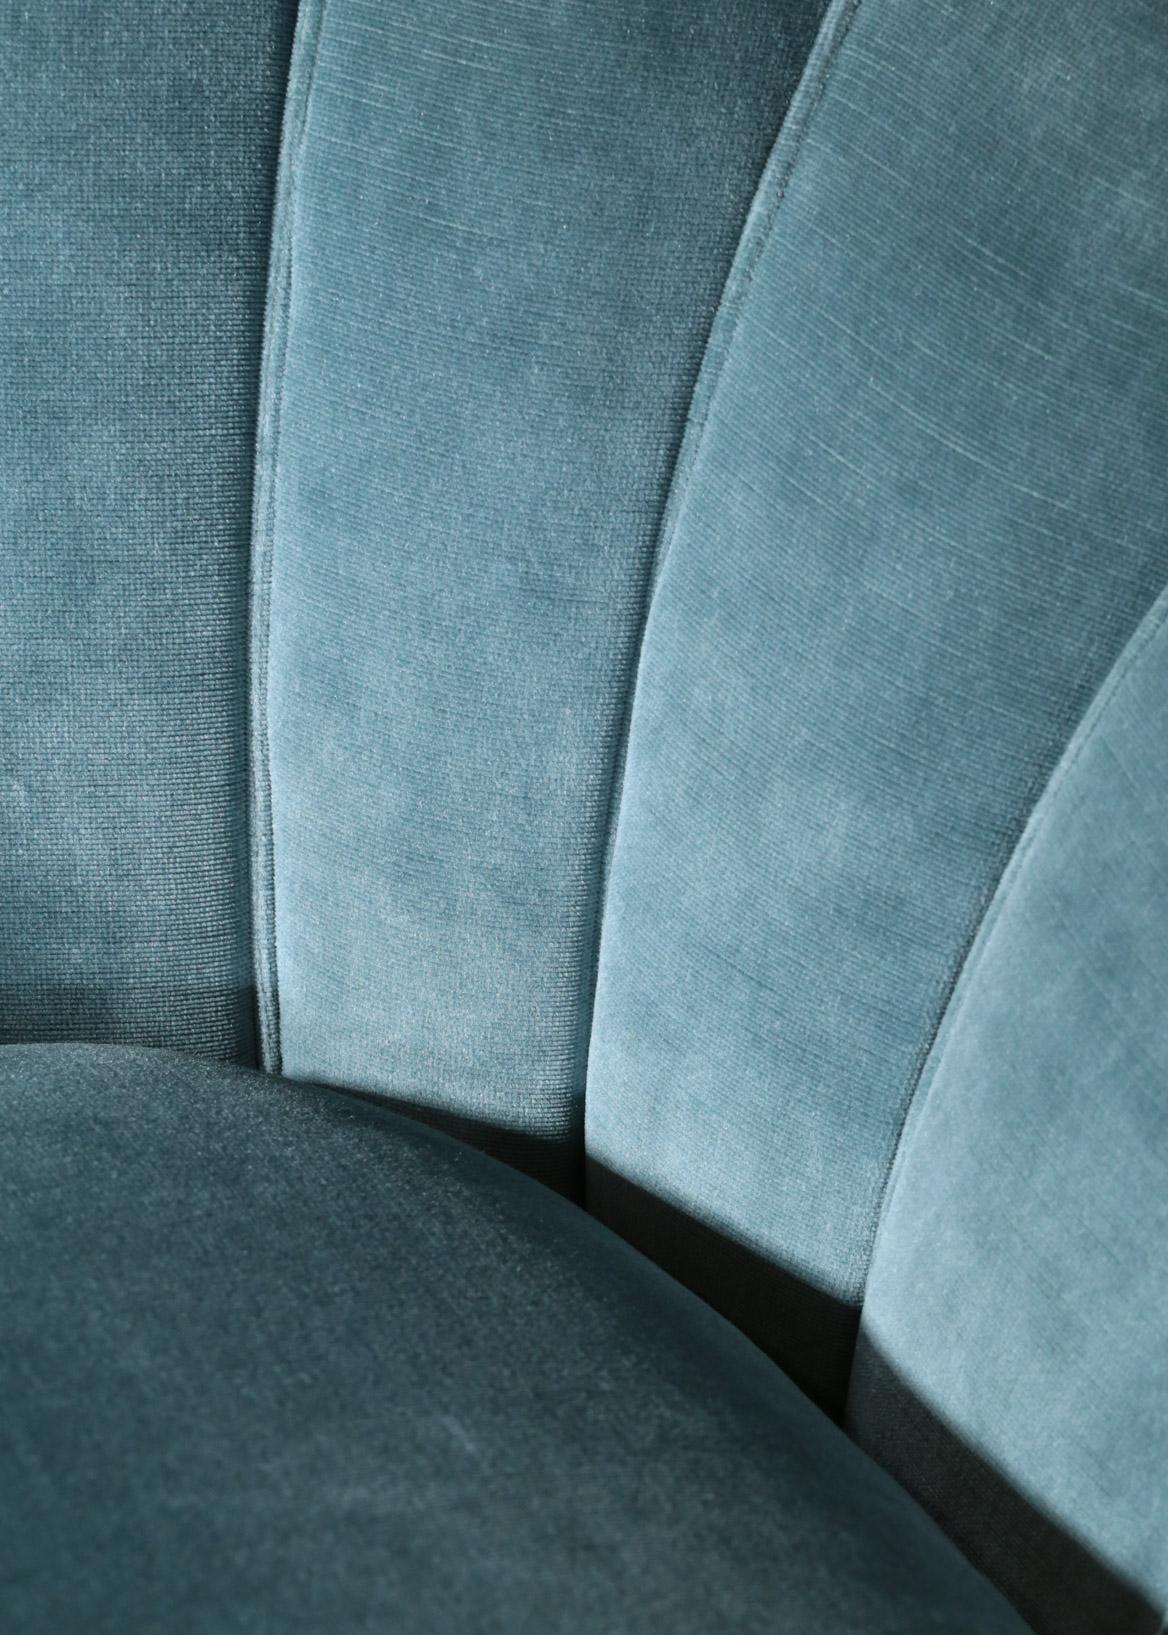 Italian Sofa by Gio Ponti Design 1960s Velvet Vintage Designer 2 Seat 4